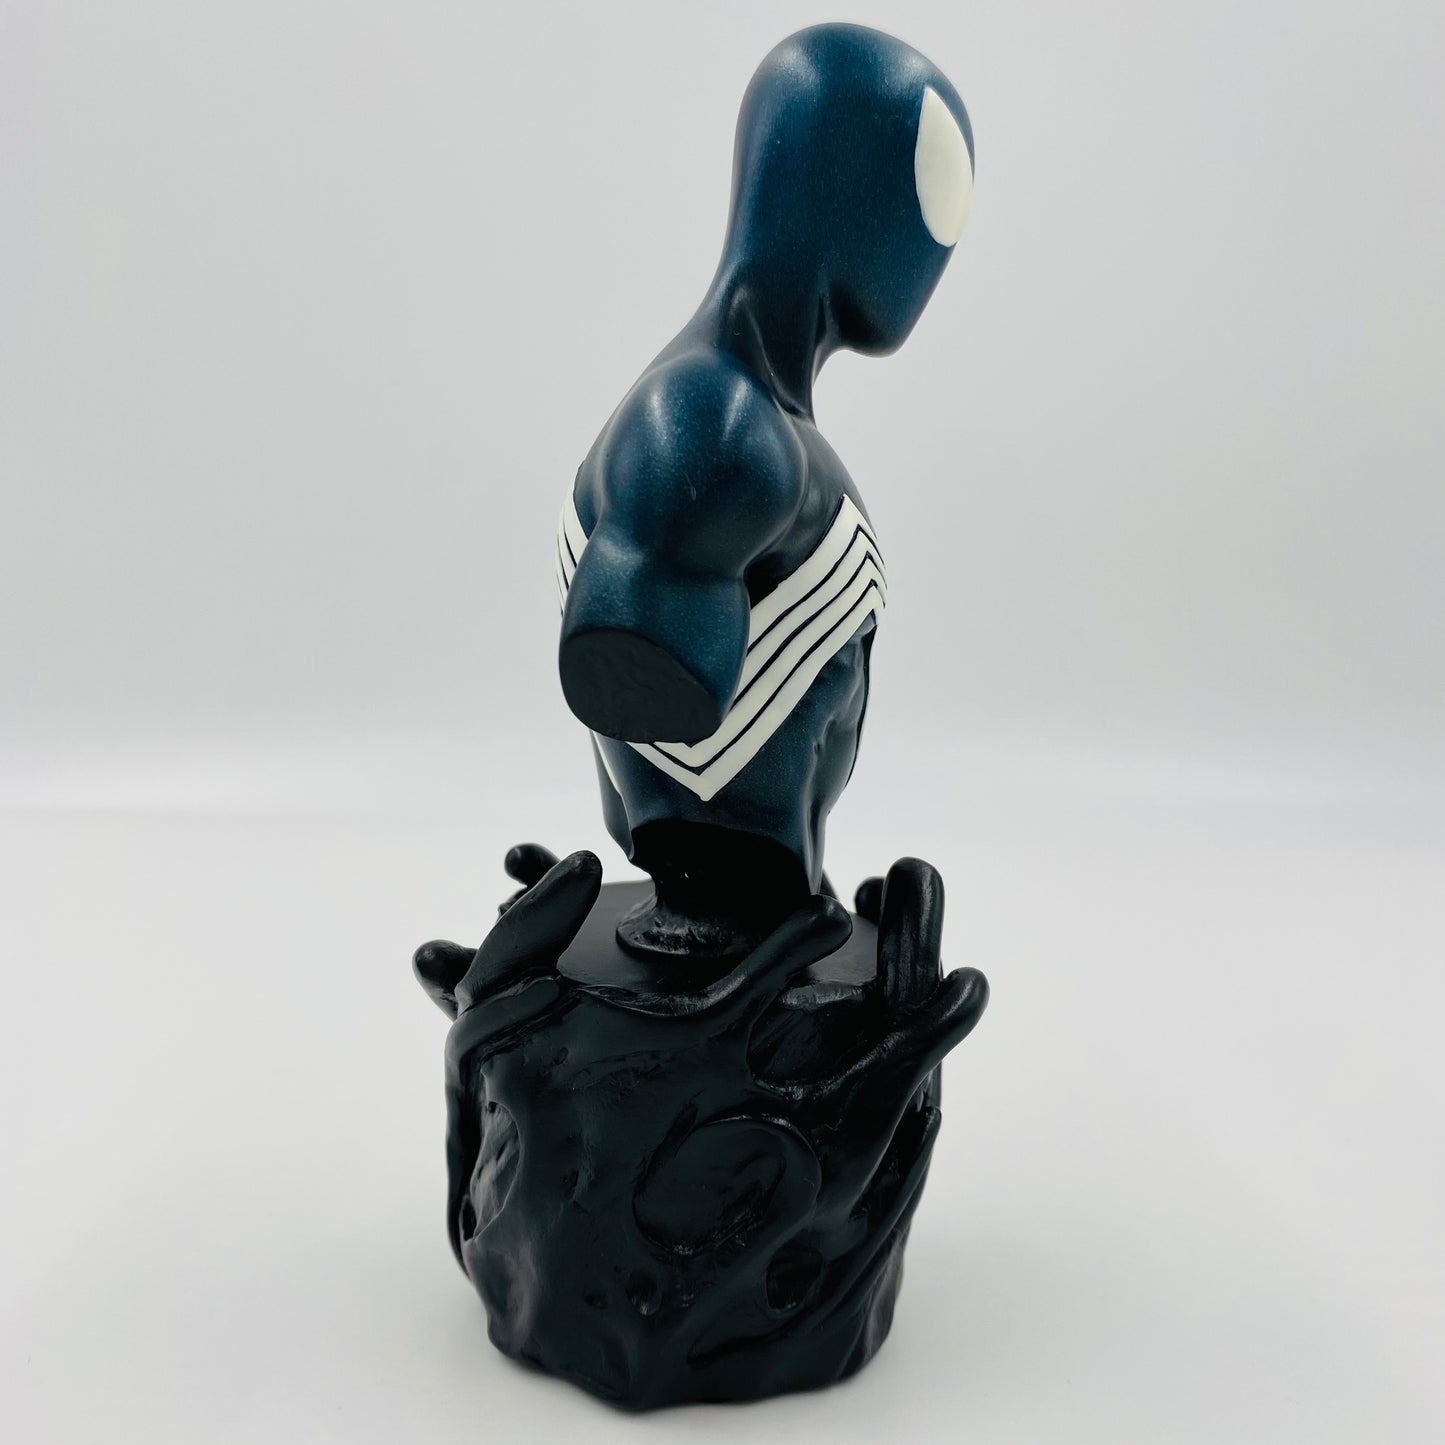 Venom & Spider-Man Marvel mini-busts triple-pack (2002) Bowen Designs